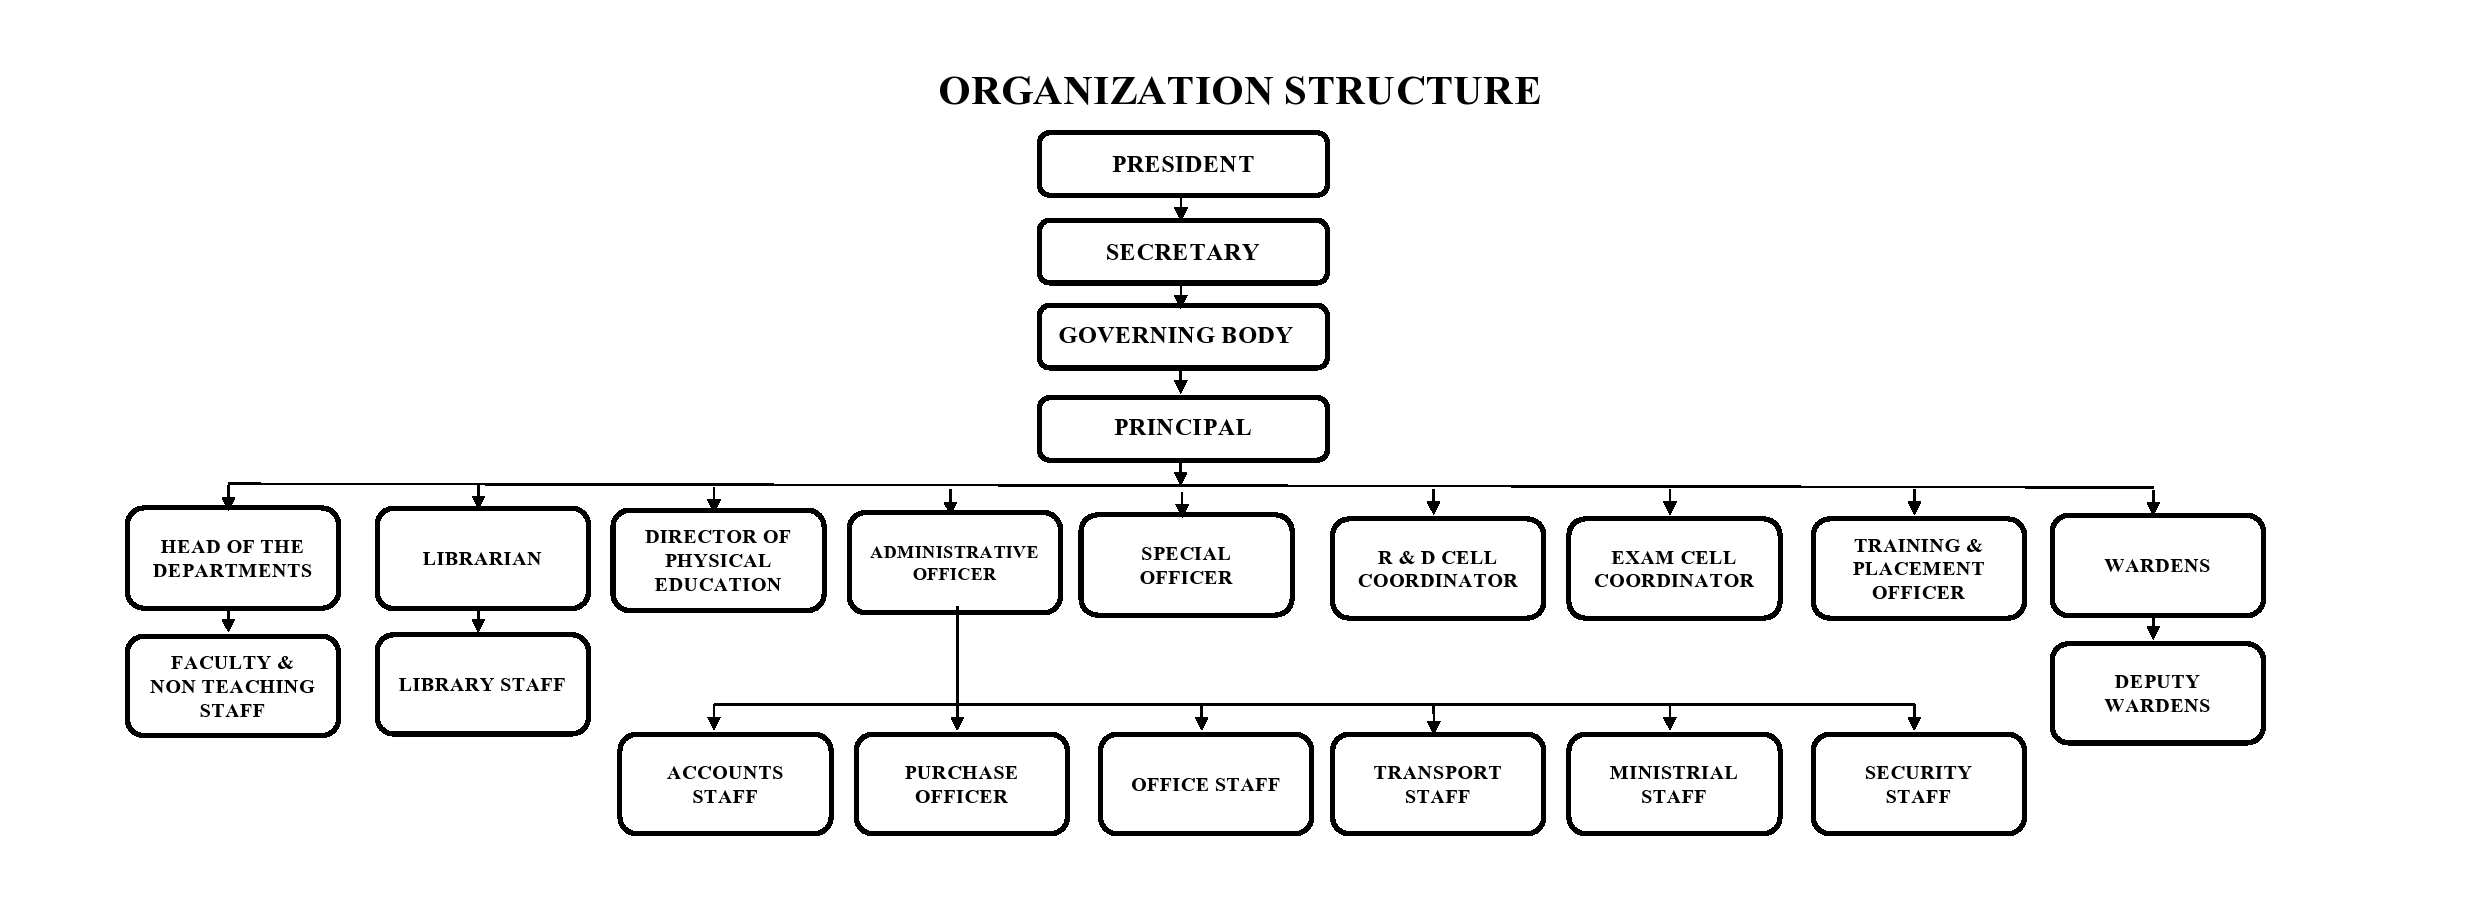 College Organizational Chart